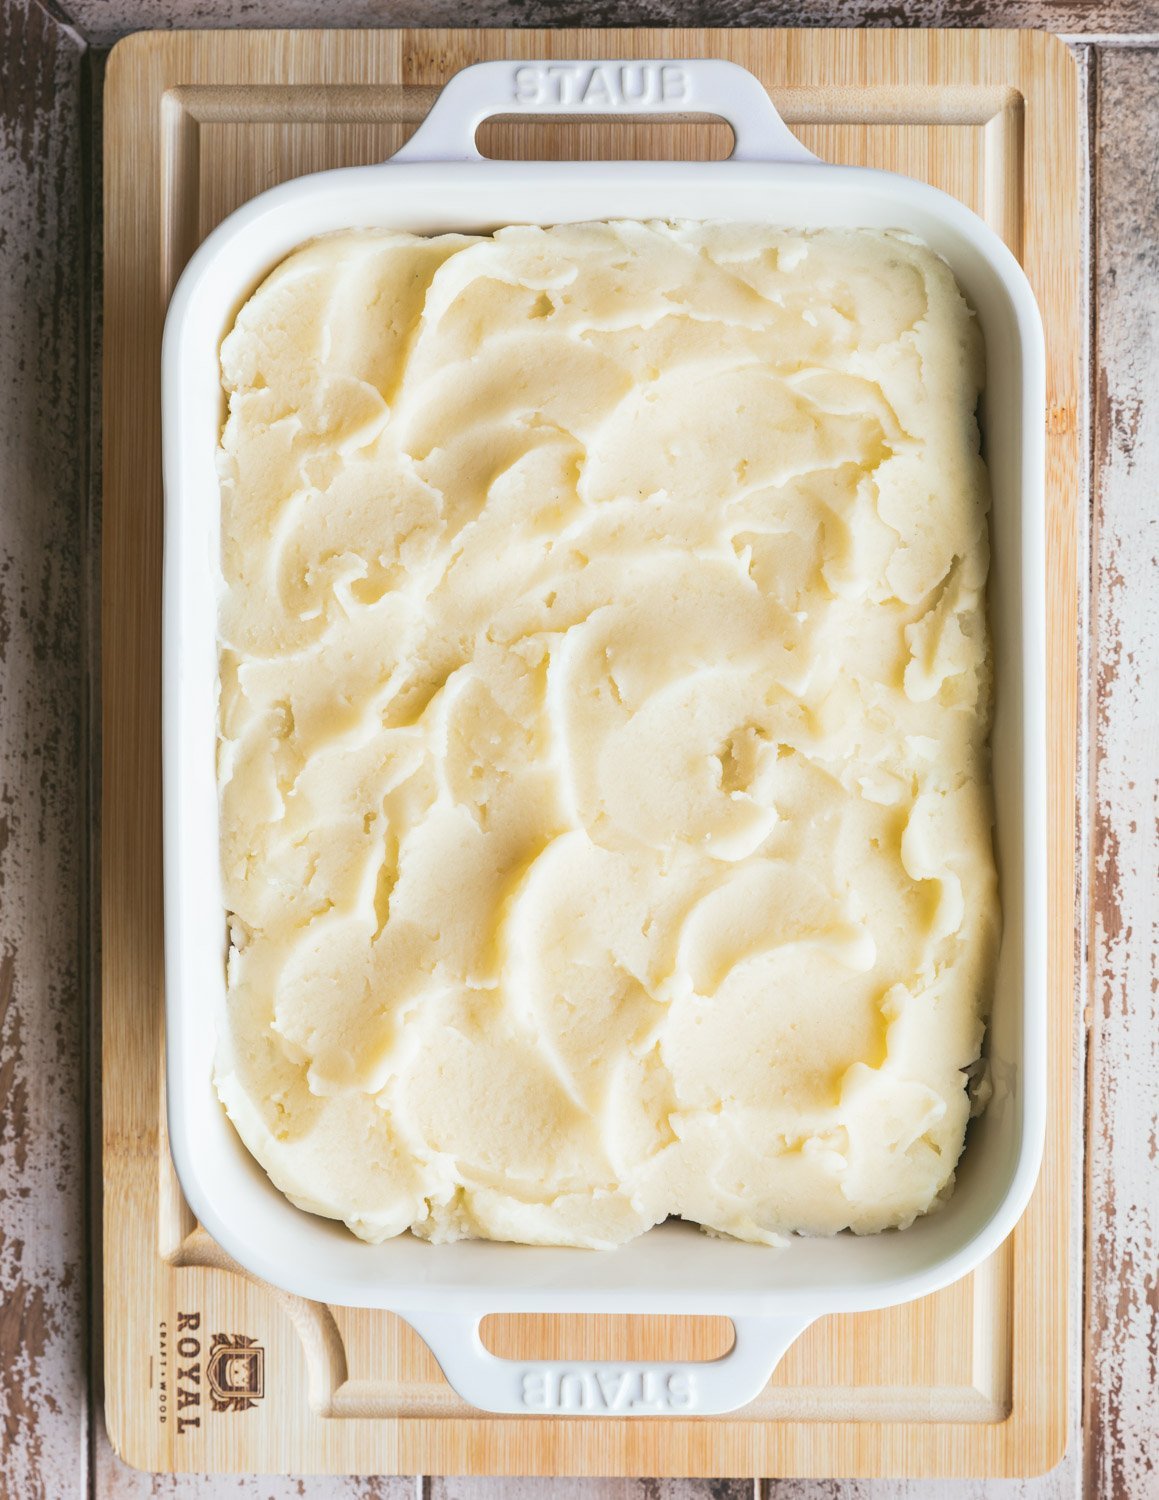 2. Creamy mashed potatoes